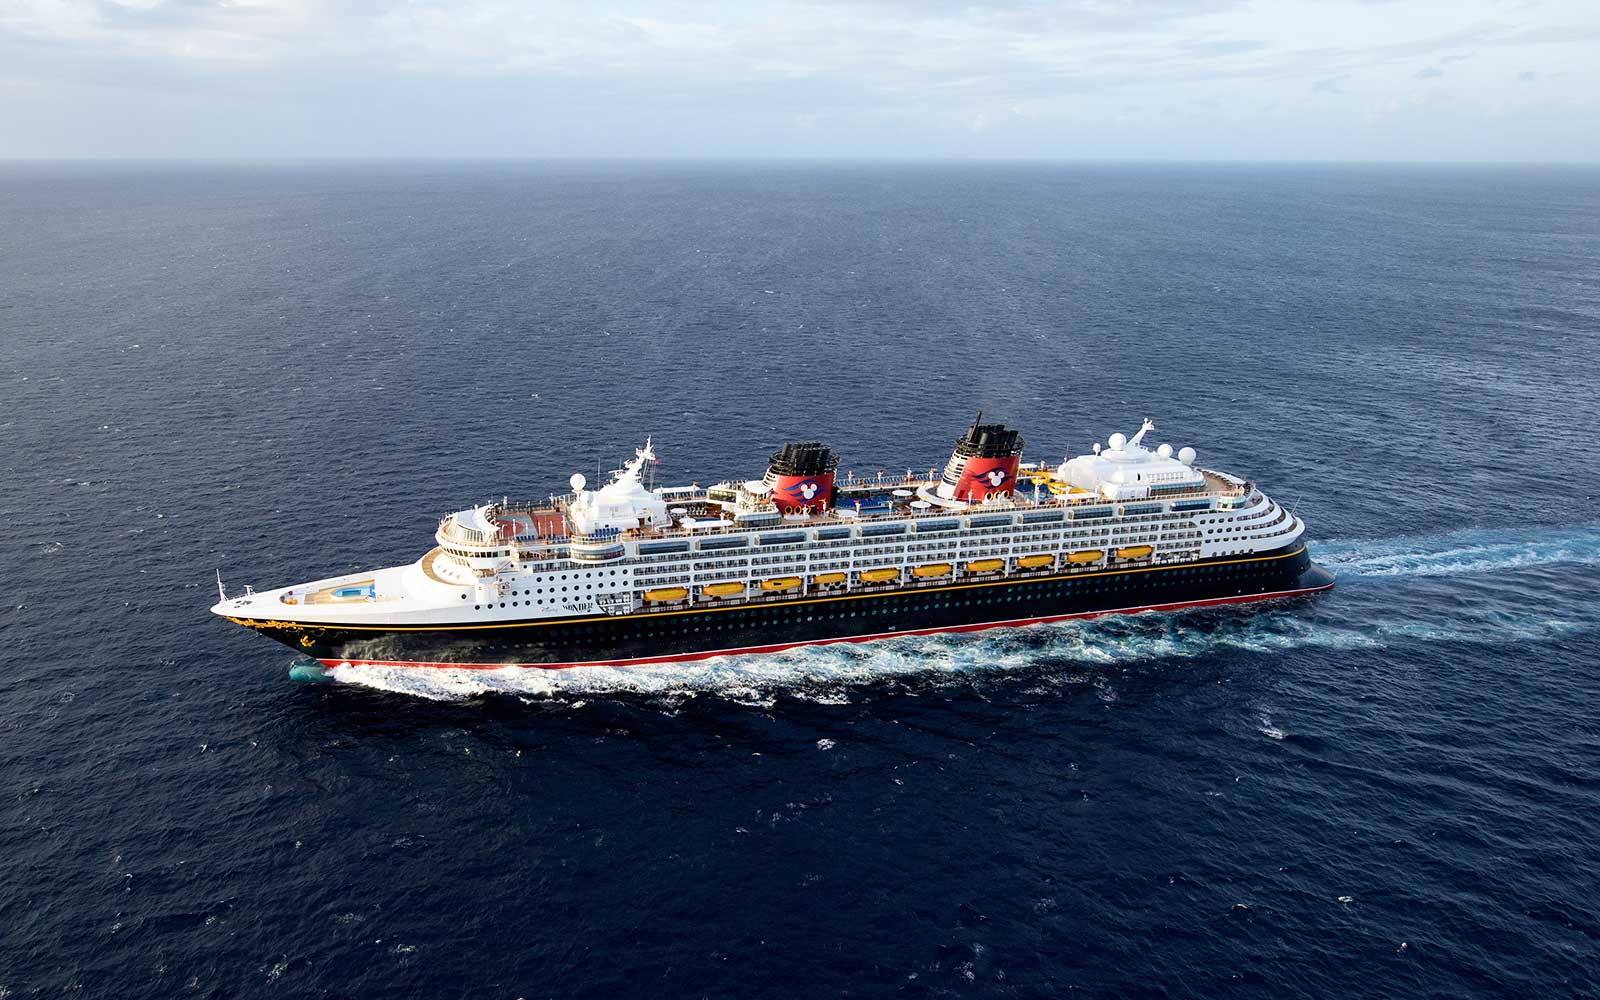 disney buys cruise ship cost